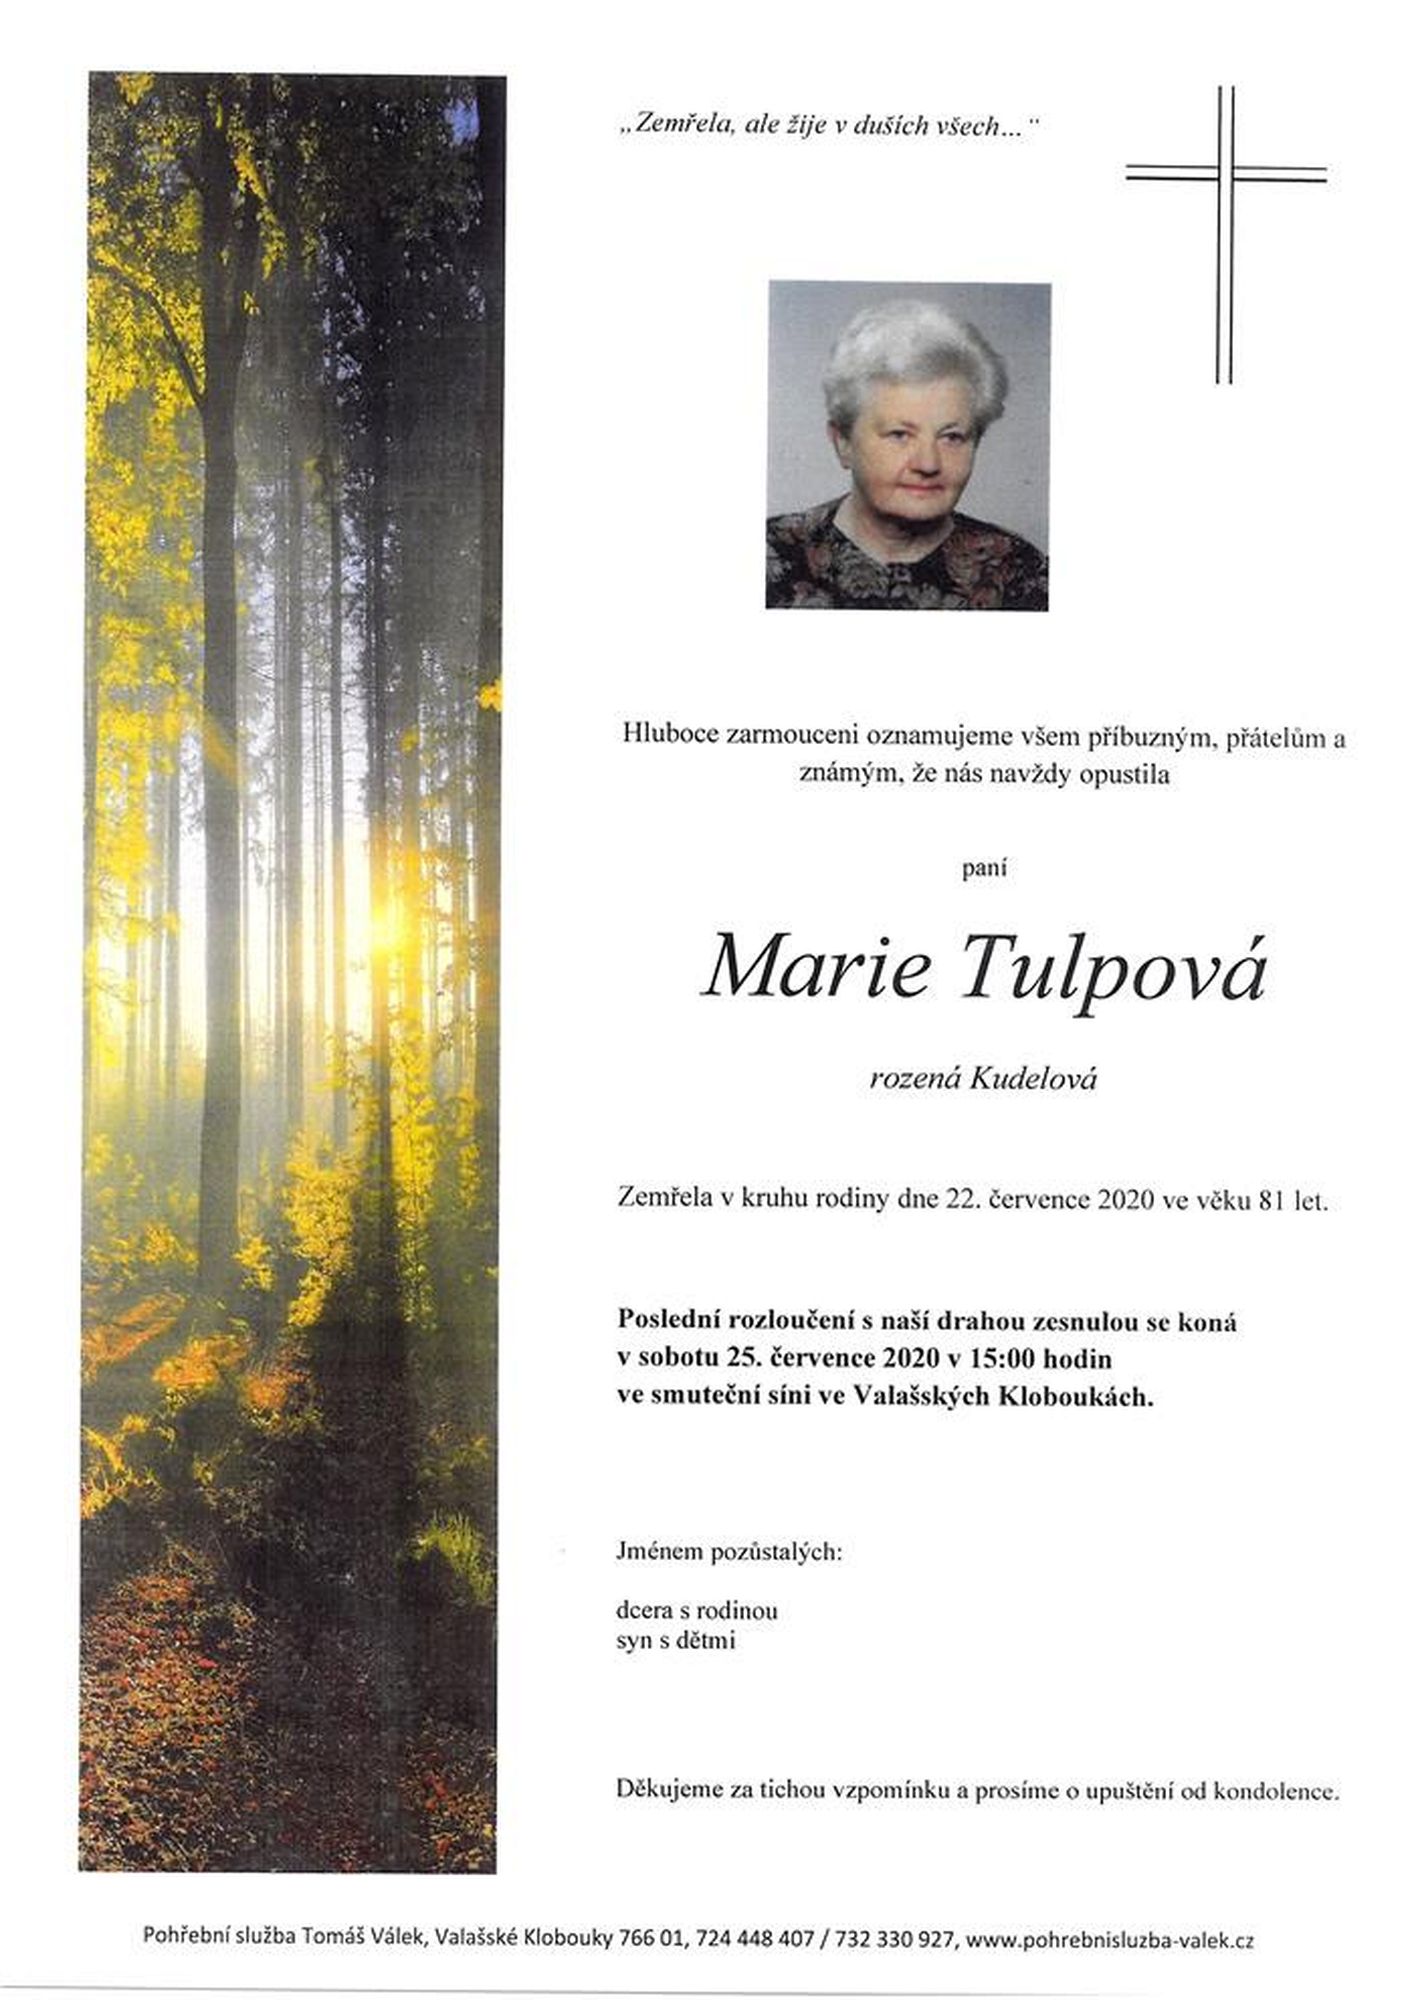 Marie Tulpová